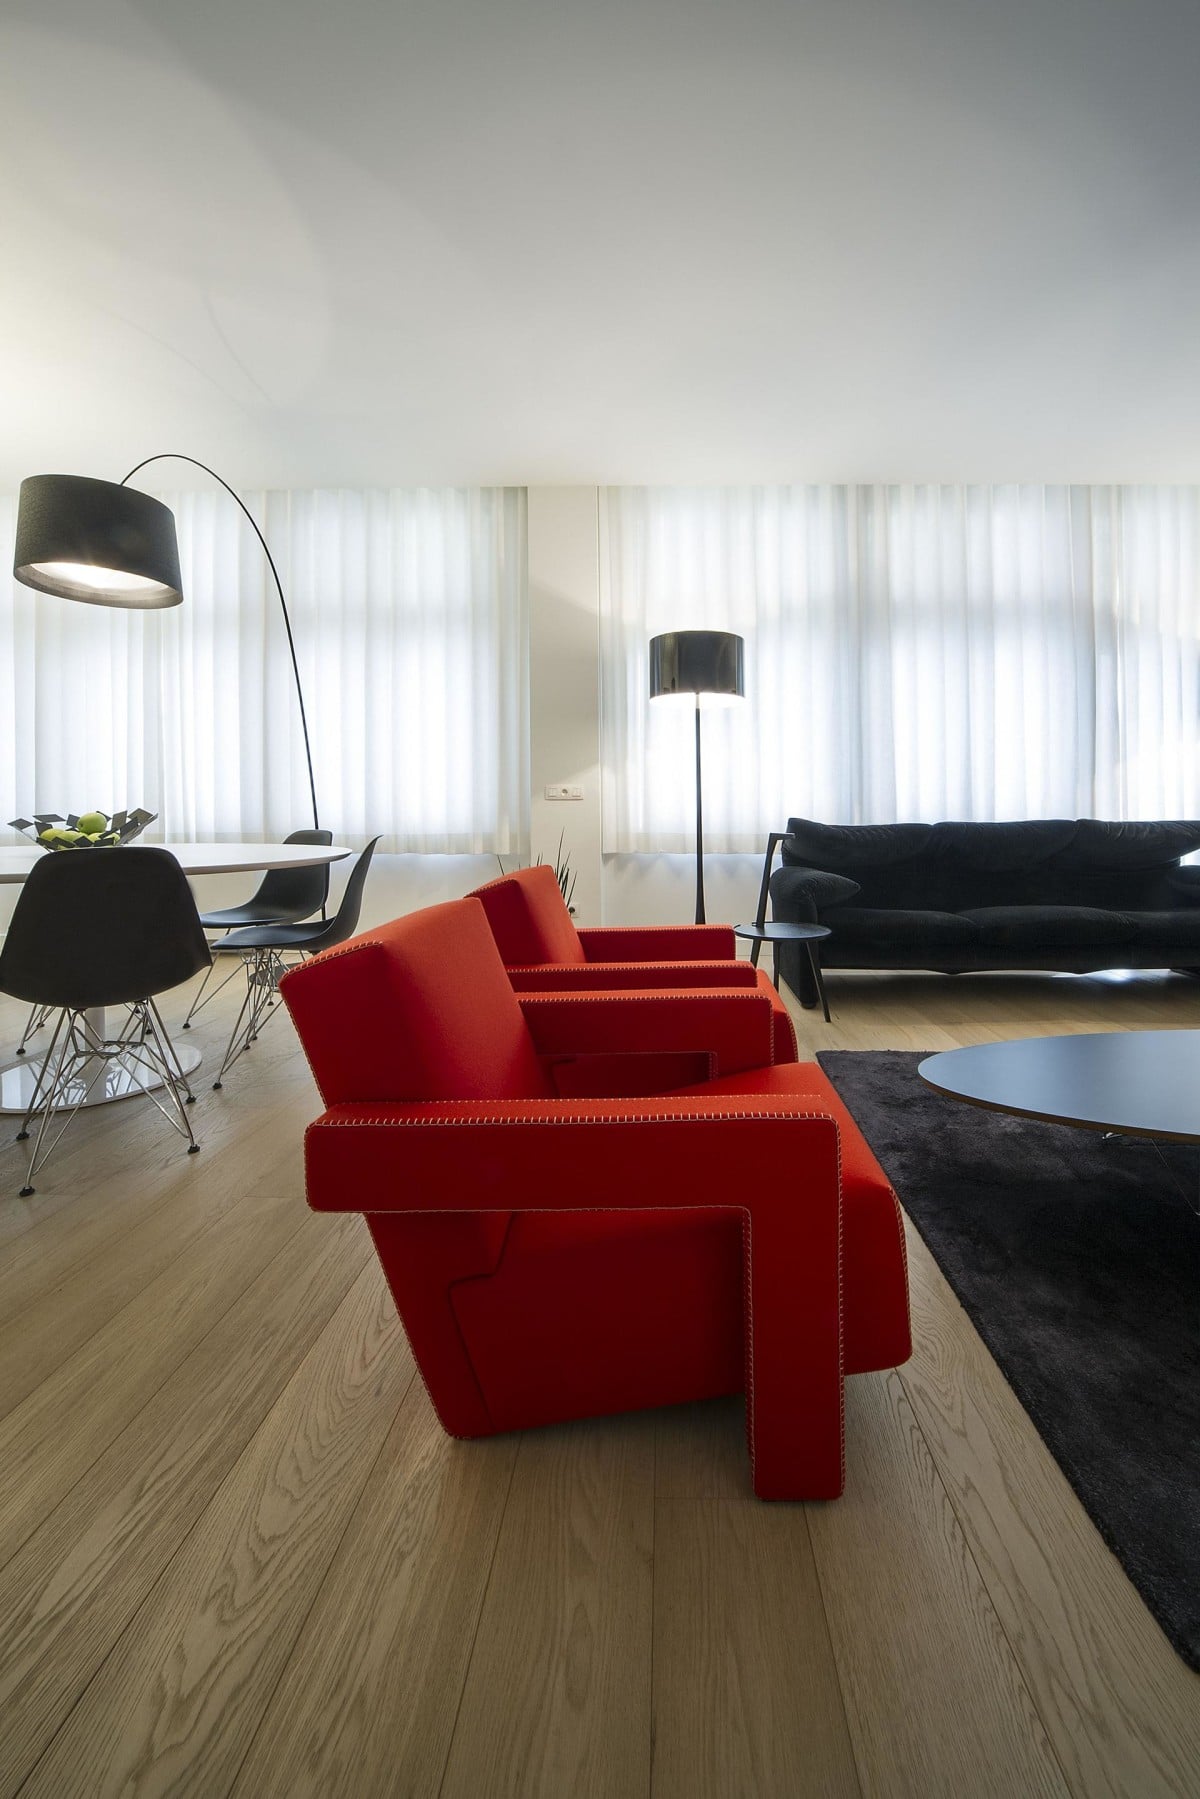 Minimalist apartment designed by Filip Deslee